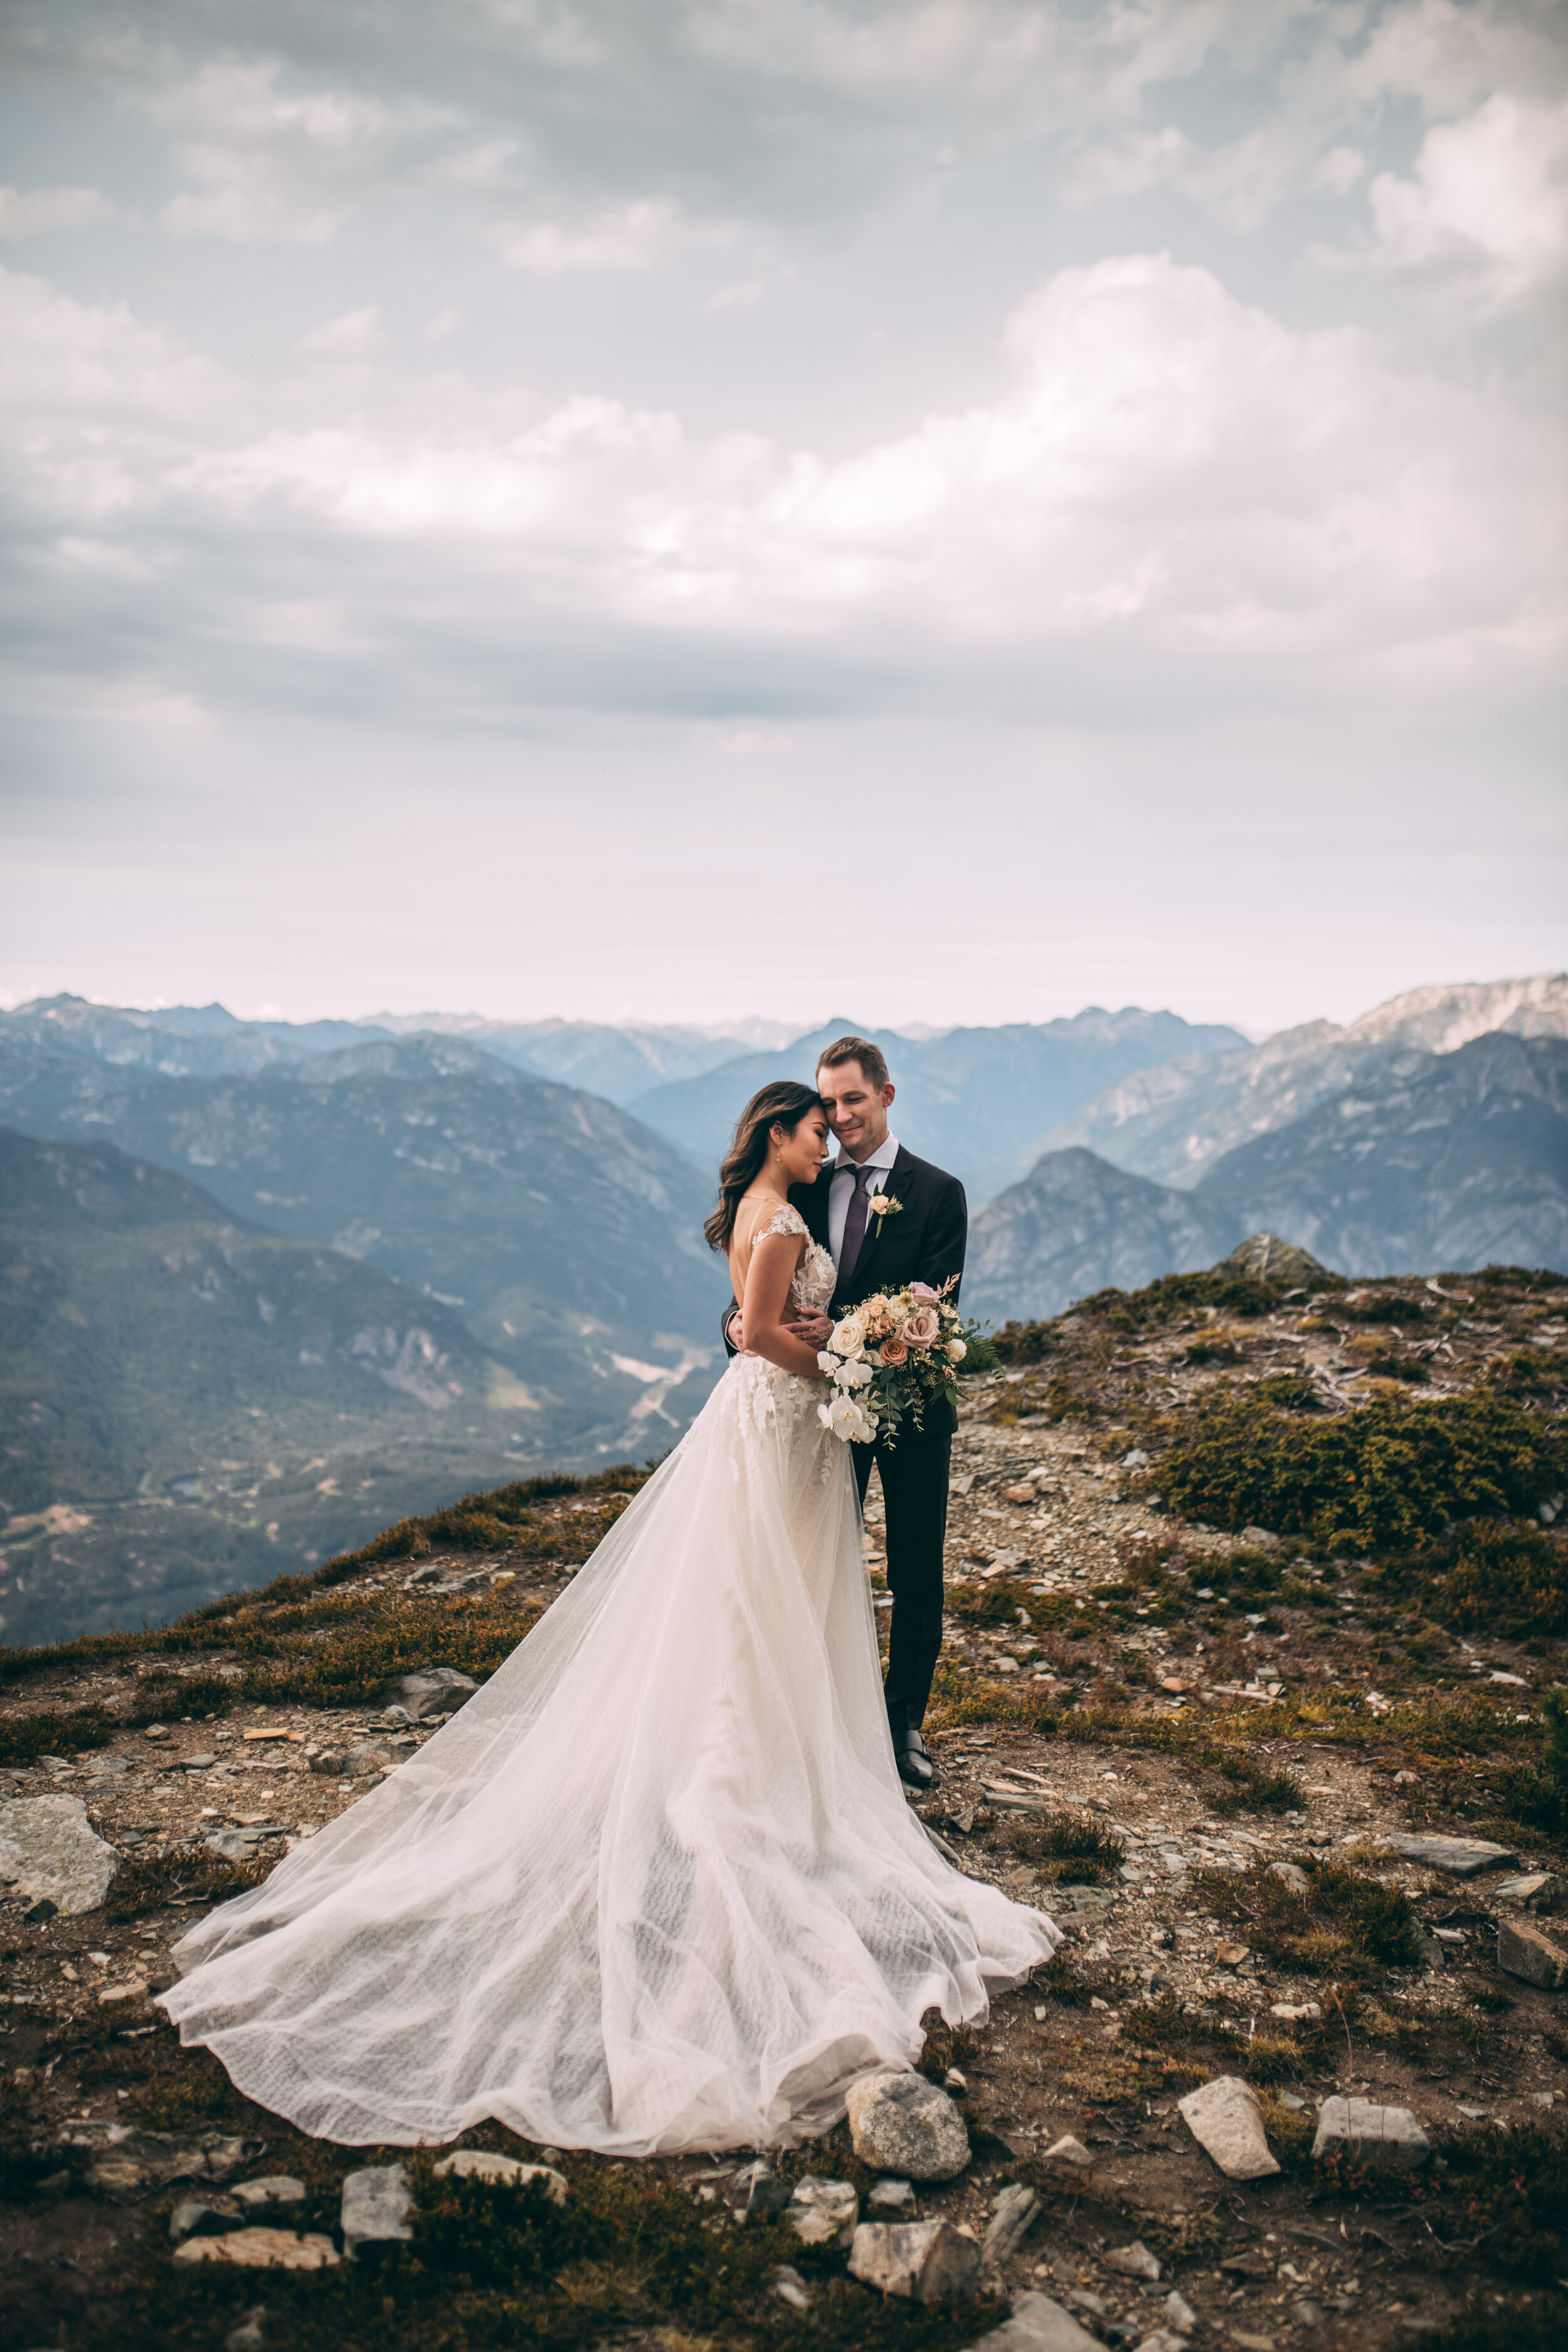 Katherine & Jamie Sneak Peeks - Mountain Top Elopement - Whistler BC - Laura Olson Photography--3.jpg